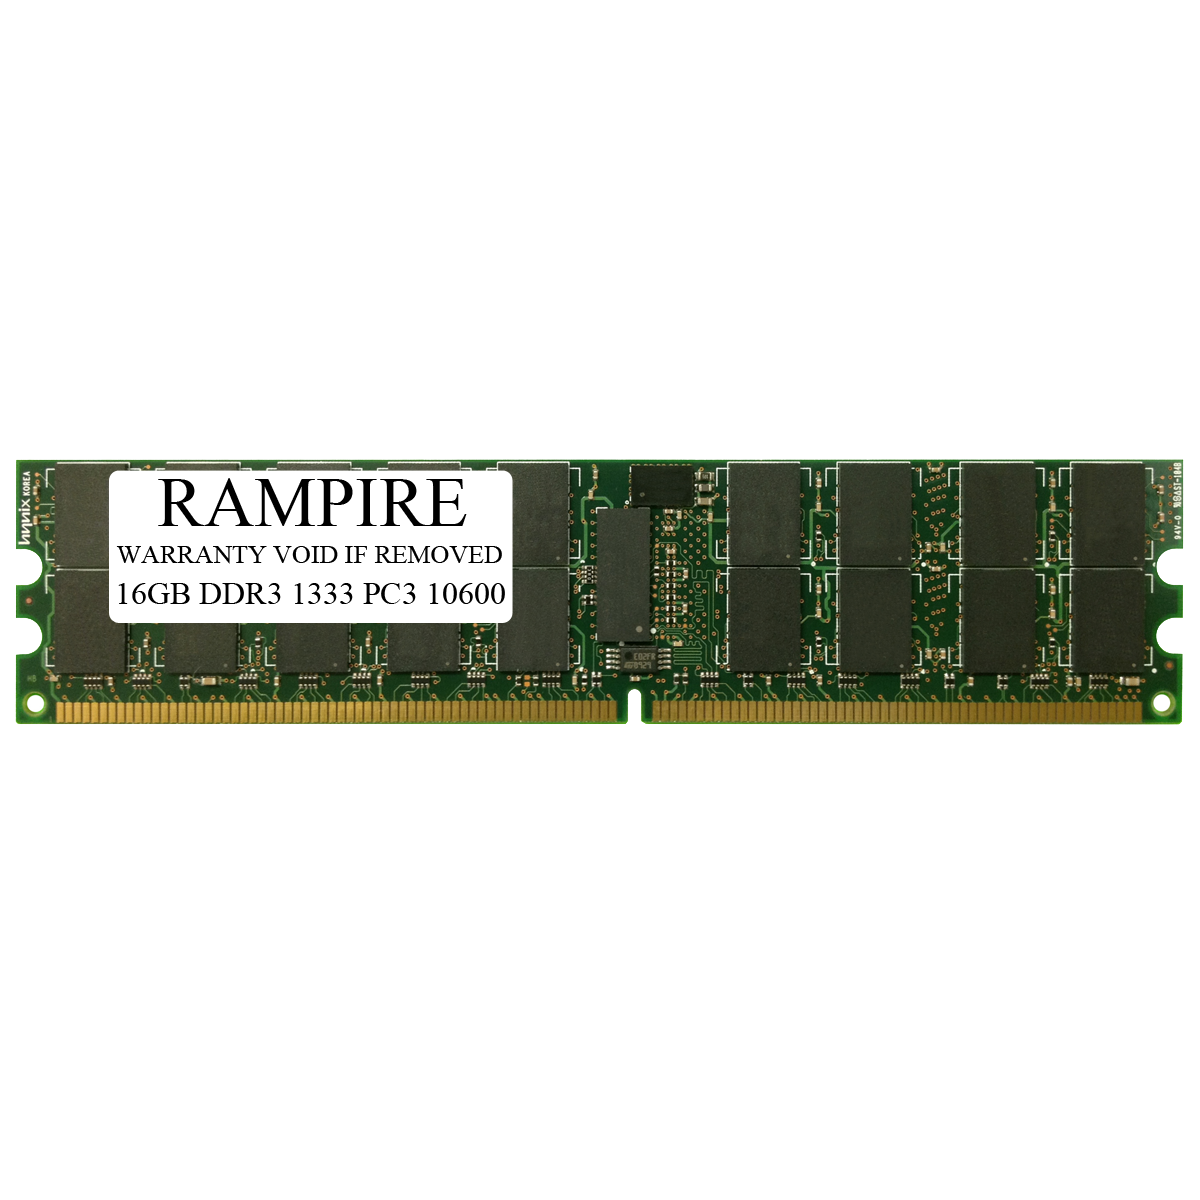 RAMPIRE 16GB DDR3 1333 (PC3 10600) 240-Pin SDRAM 2Rx4 Standard Profile 1.5V ECC Registered Server Memory